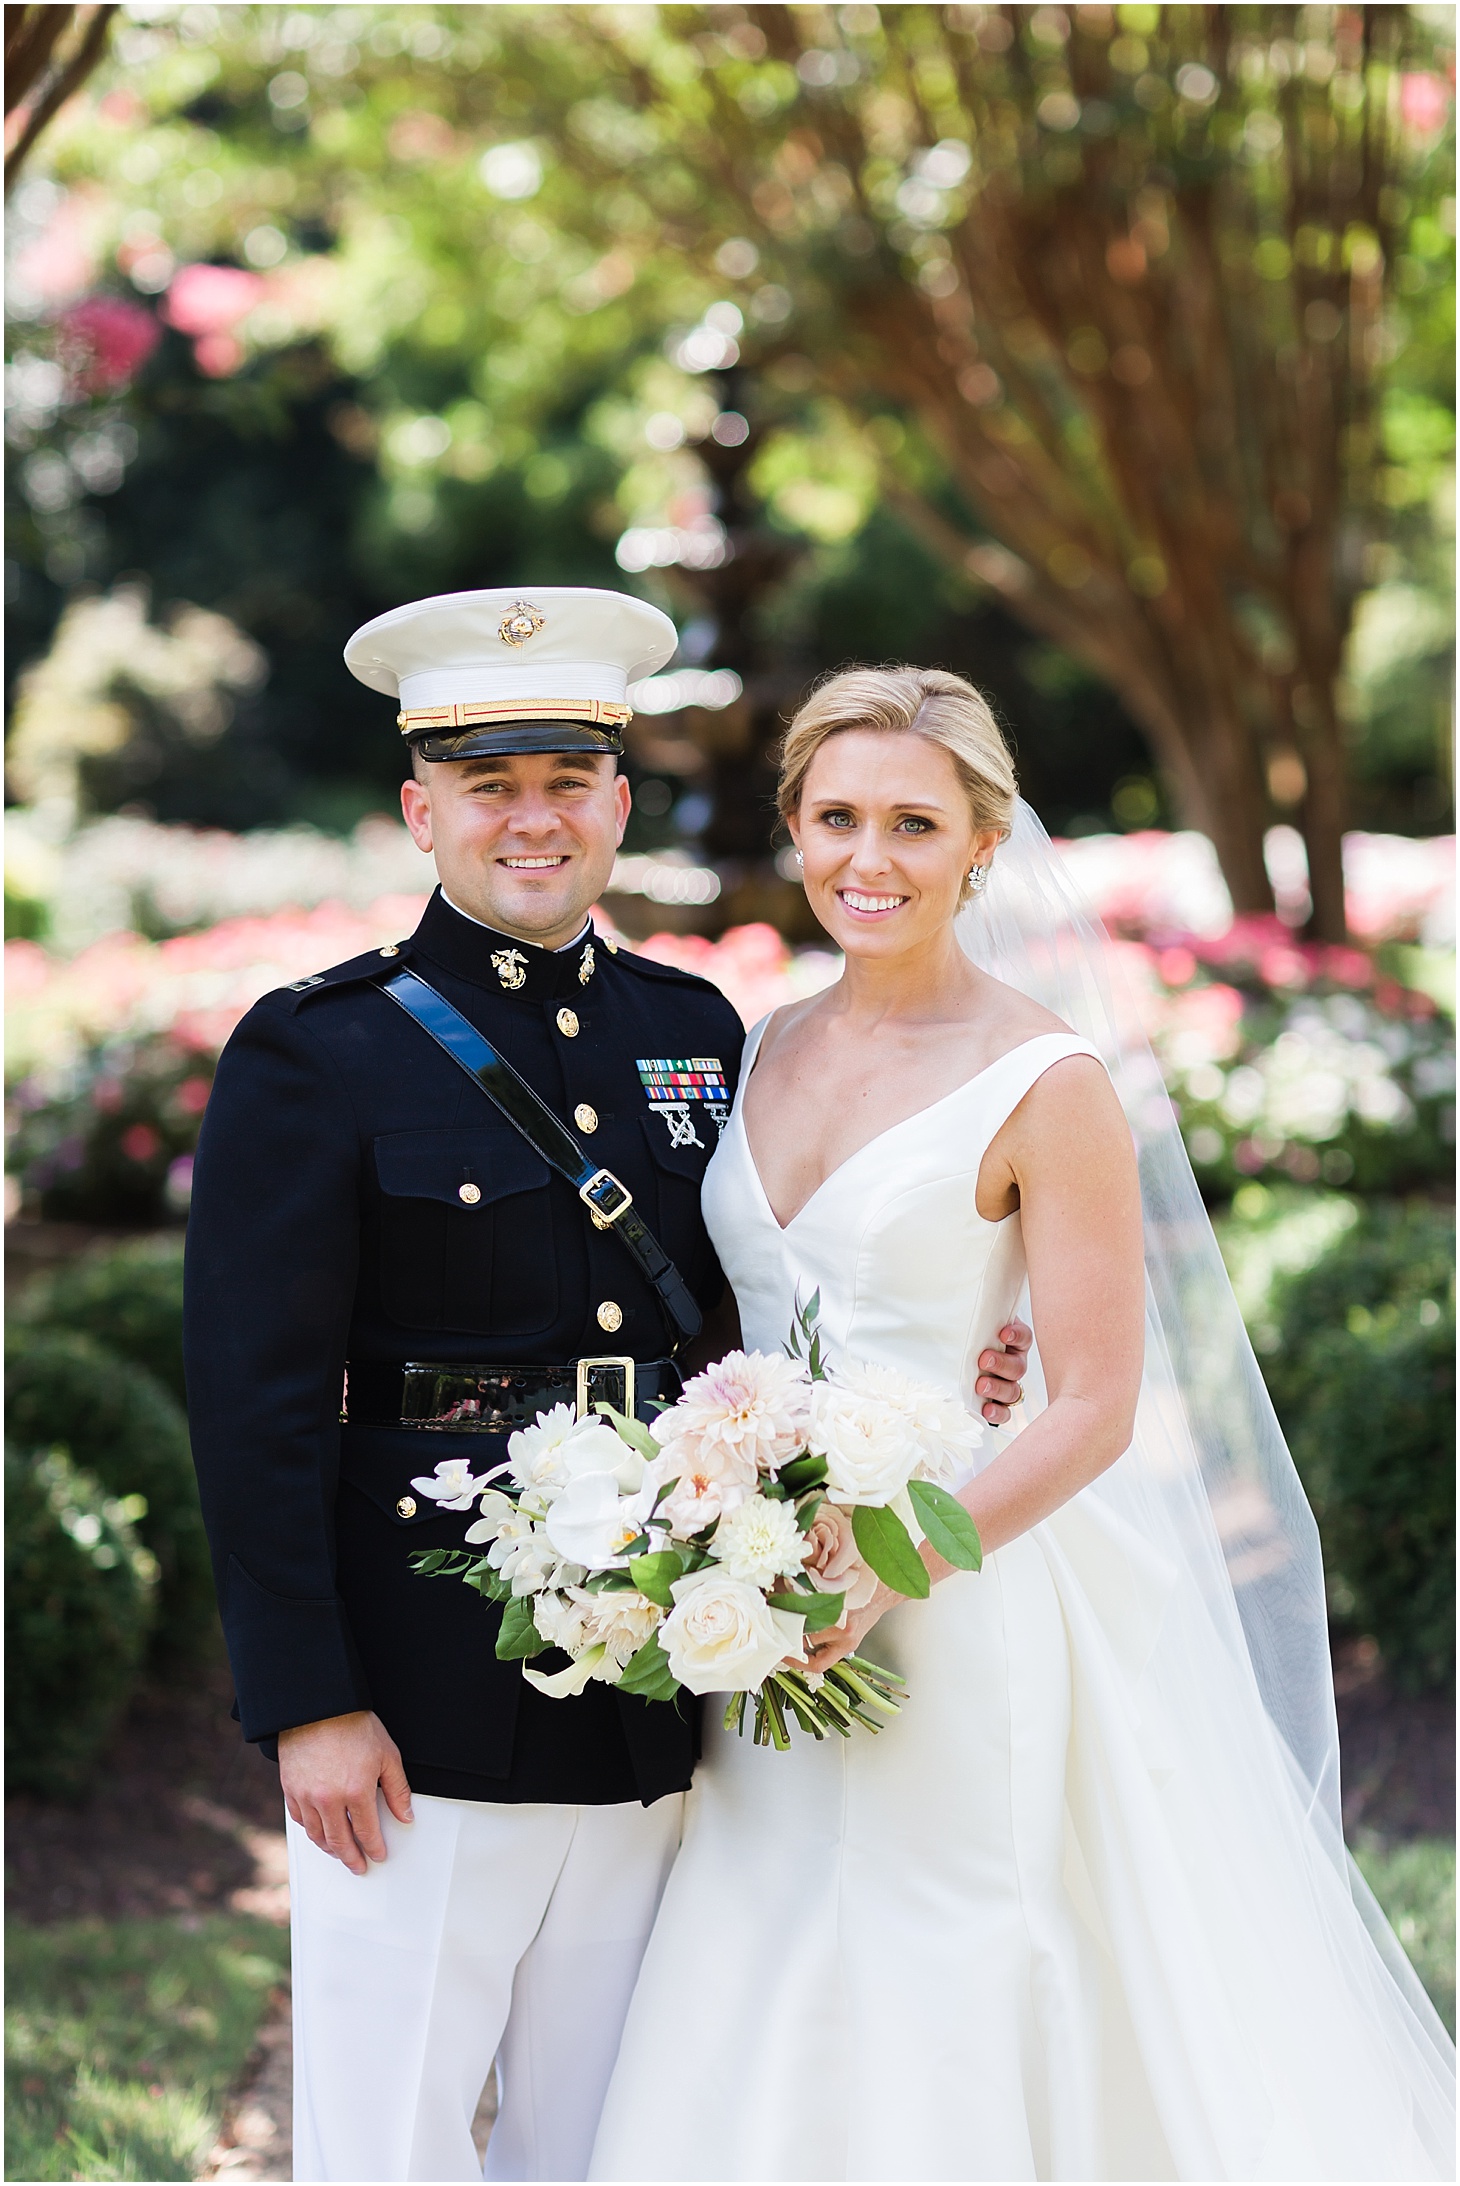 Wedding Portraits at US Naval Academy Chapel | Southern Magnolia Wedding at the Naval Academy and Gibson Island Club | Sarah Bradshaw Photography